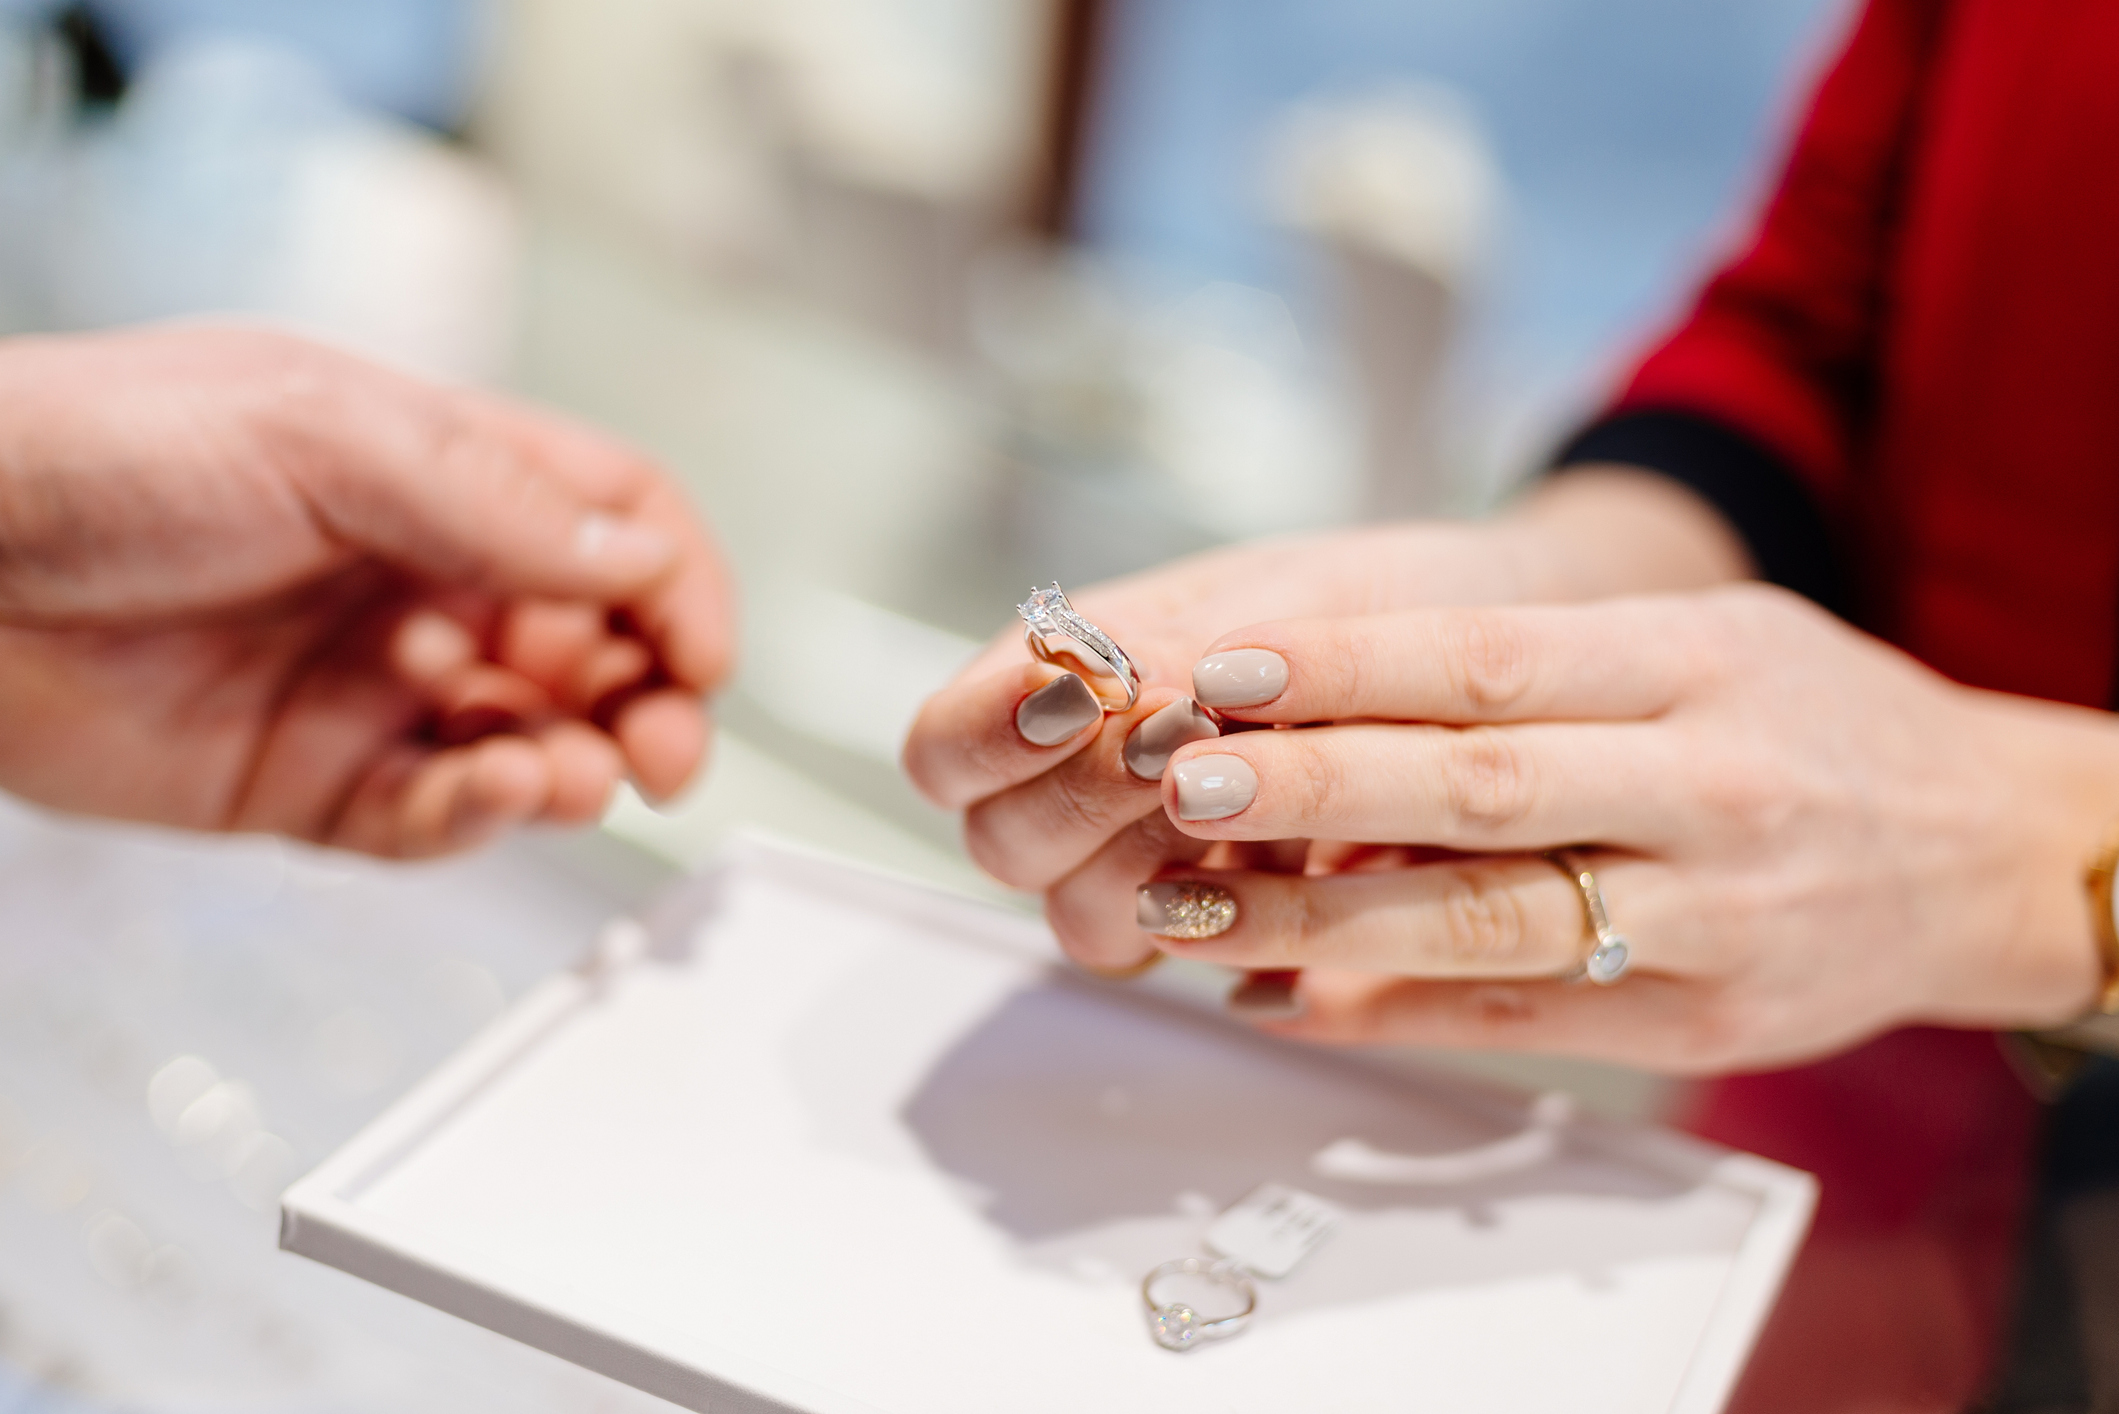 Say "I Do" to Elegant Zales Engagement Rings at Shops of Southlake